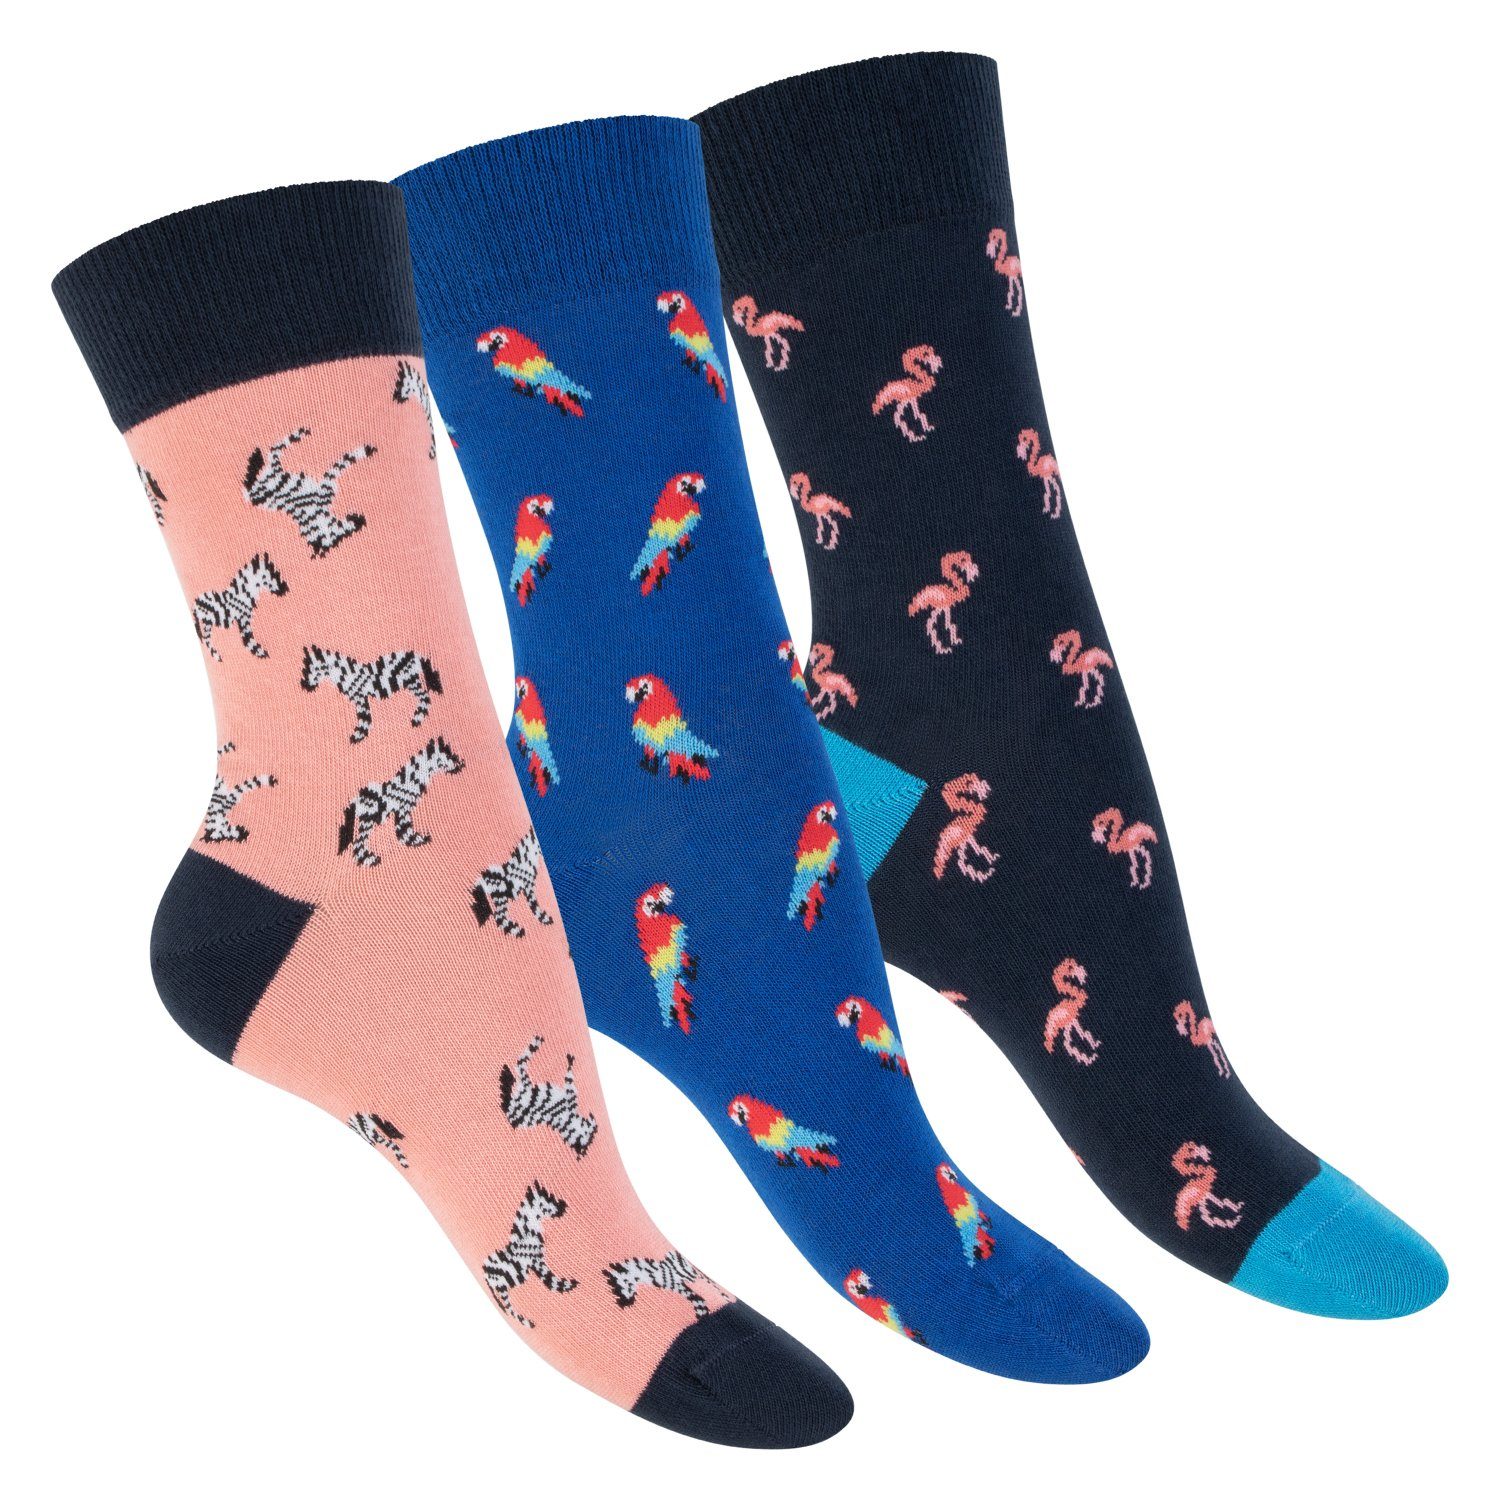 Modische Socken, Flamingo Basicsocken Damen/Herren Footstar Bunte Motiv Baumwollsocken